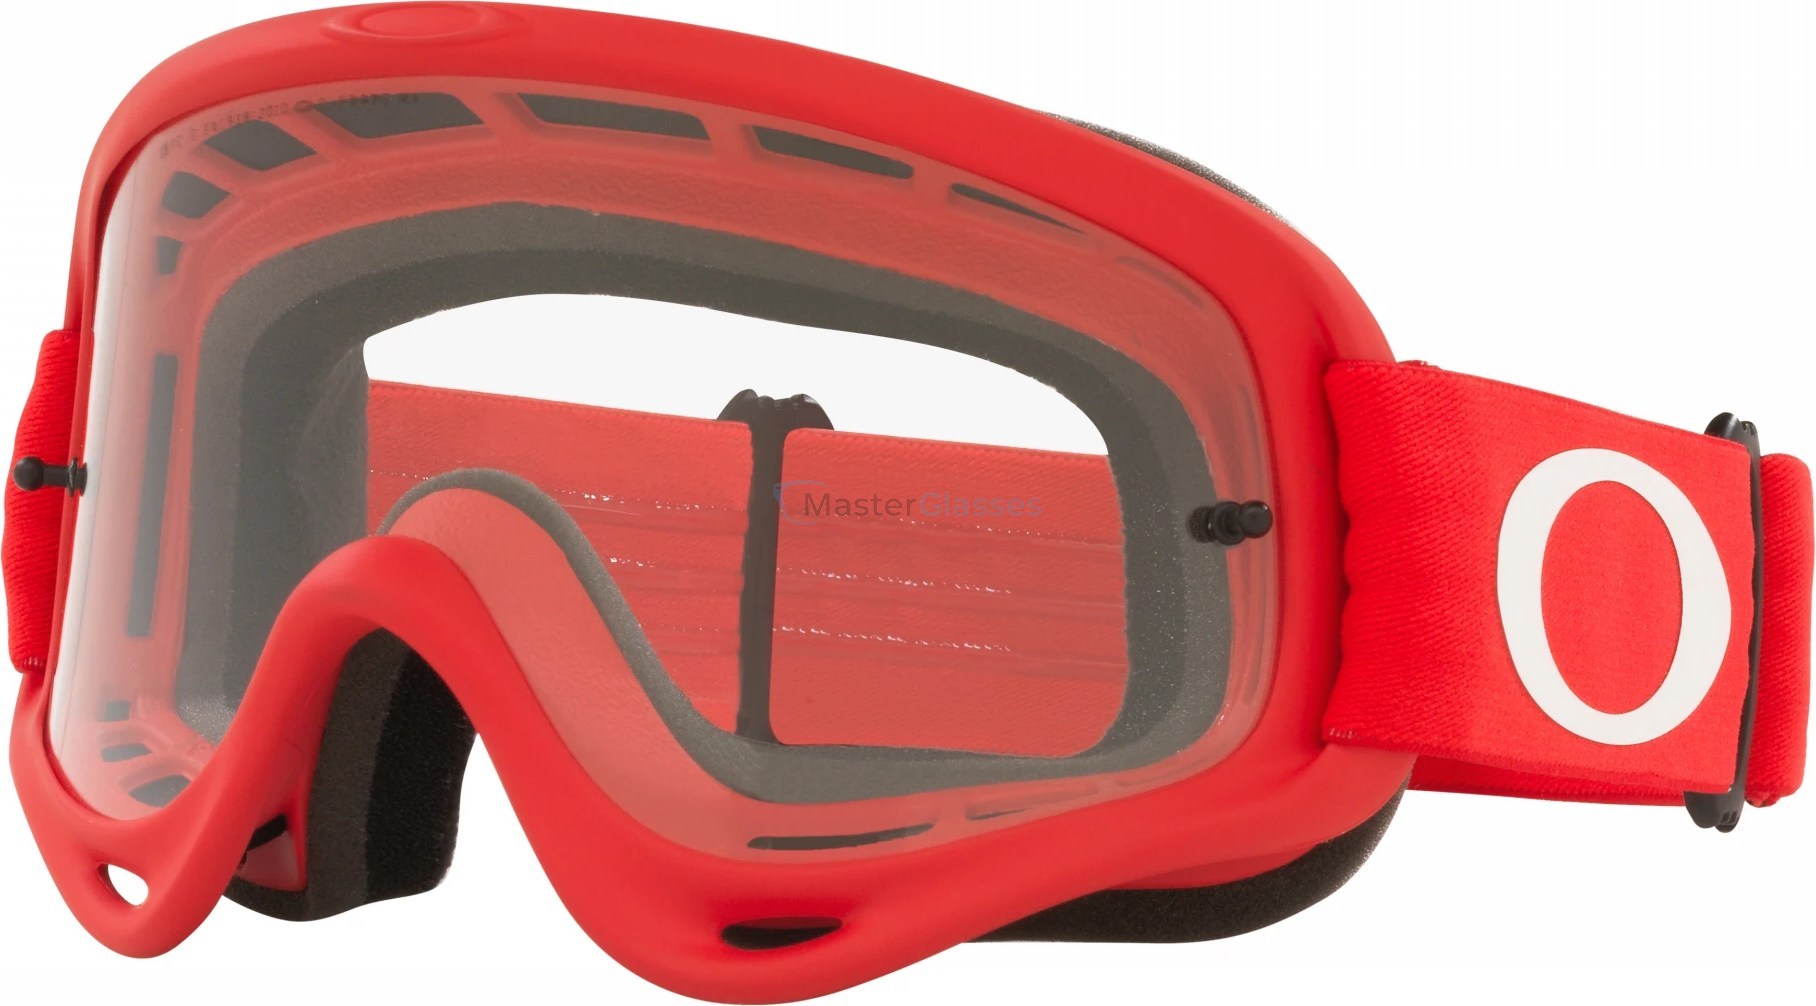    Oakley mx goggles O-frame Mx OO7029 702970 Moto Red Sand